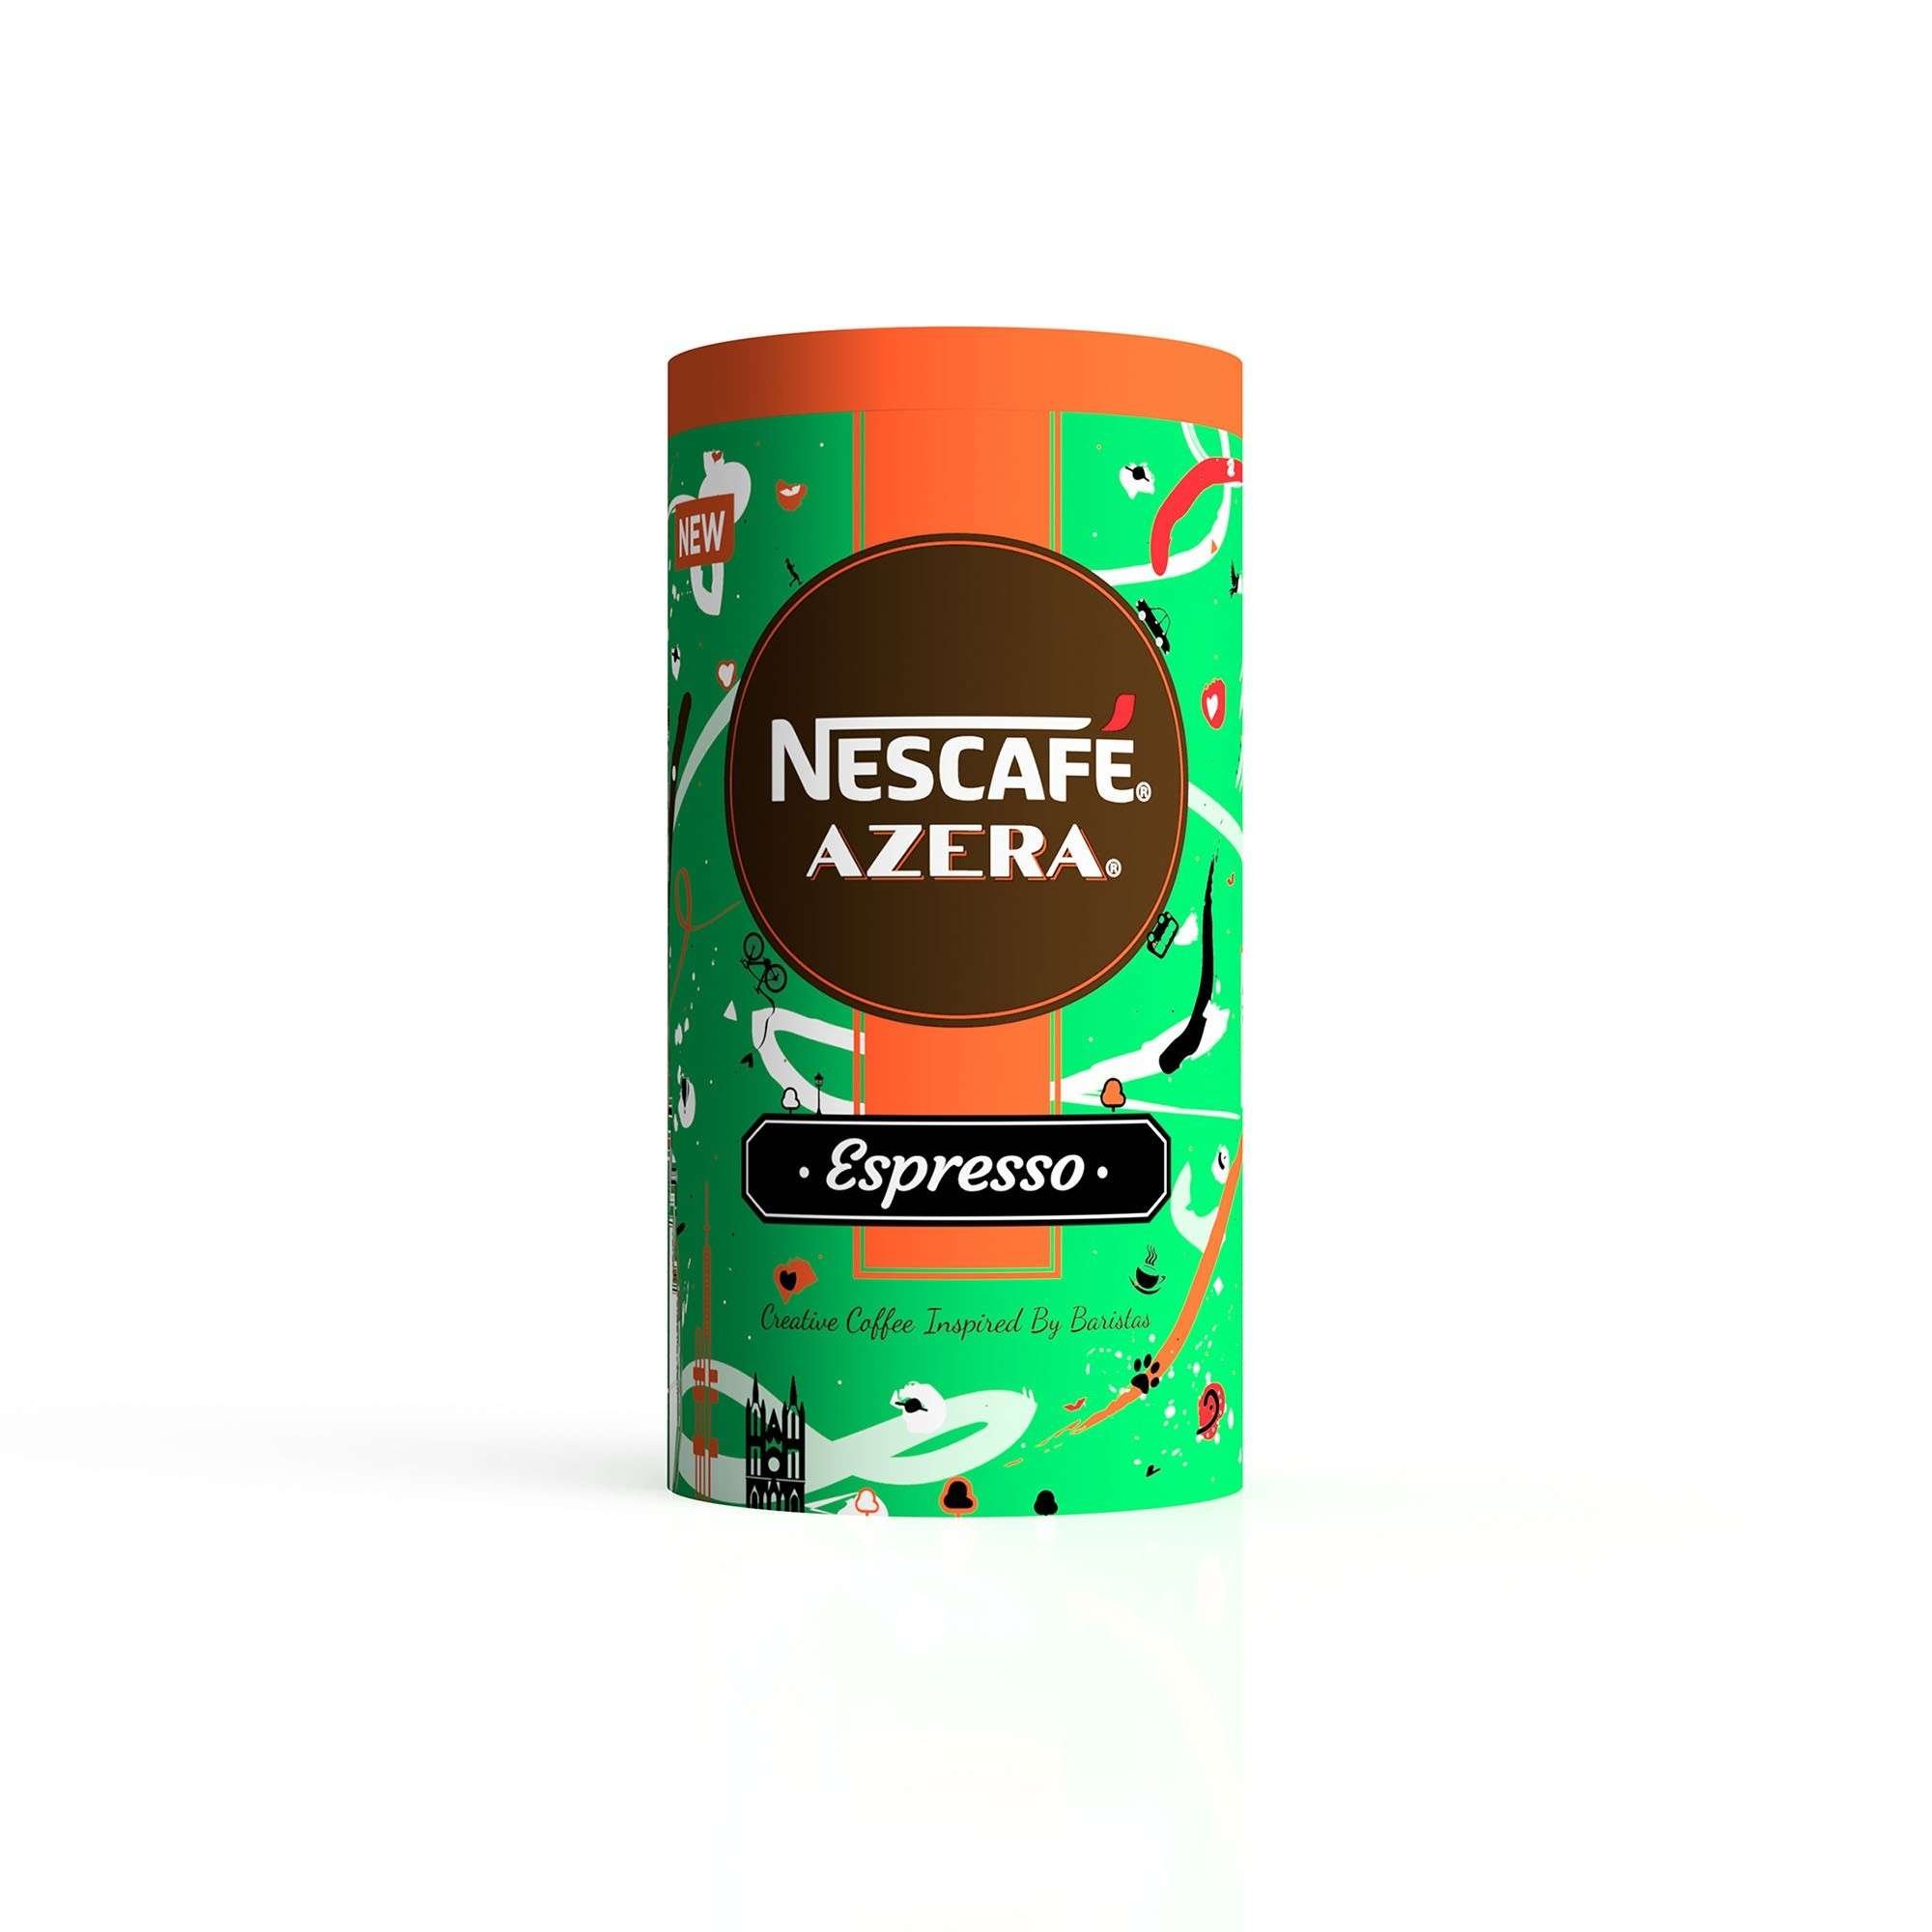 Miroslavo: Nescafé Azera Label Design inspired by City Life